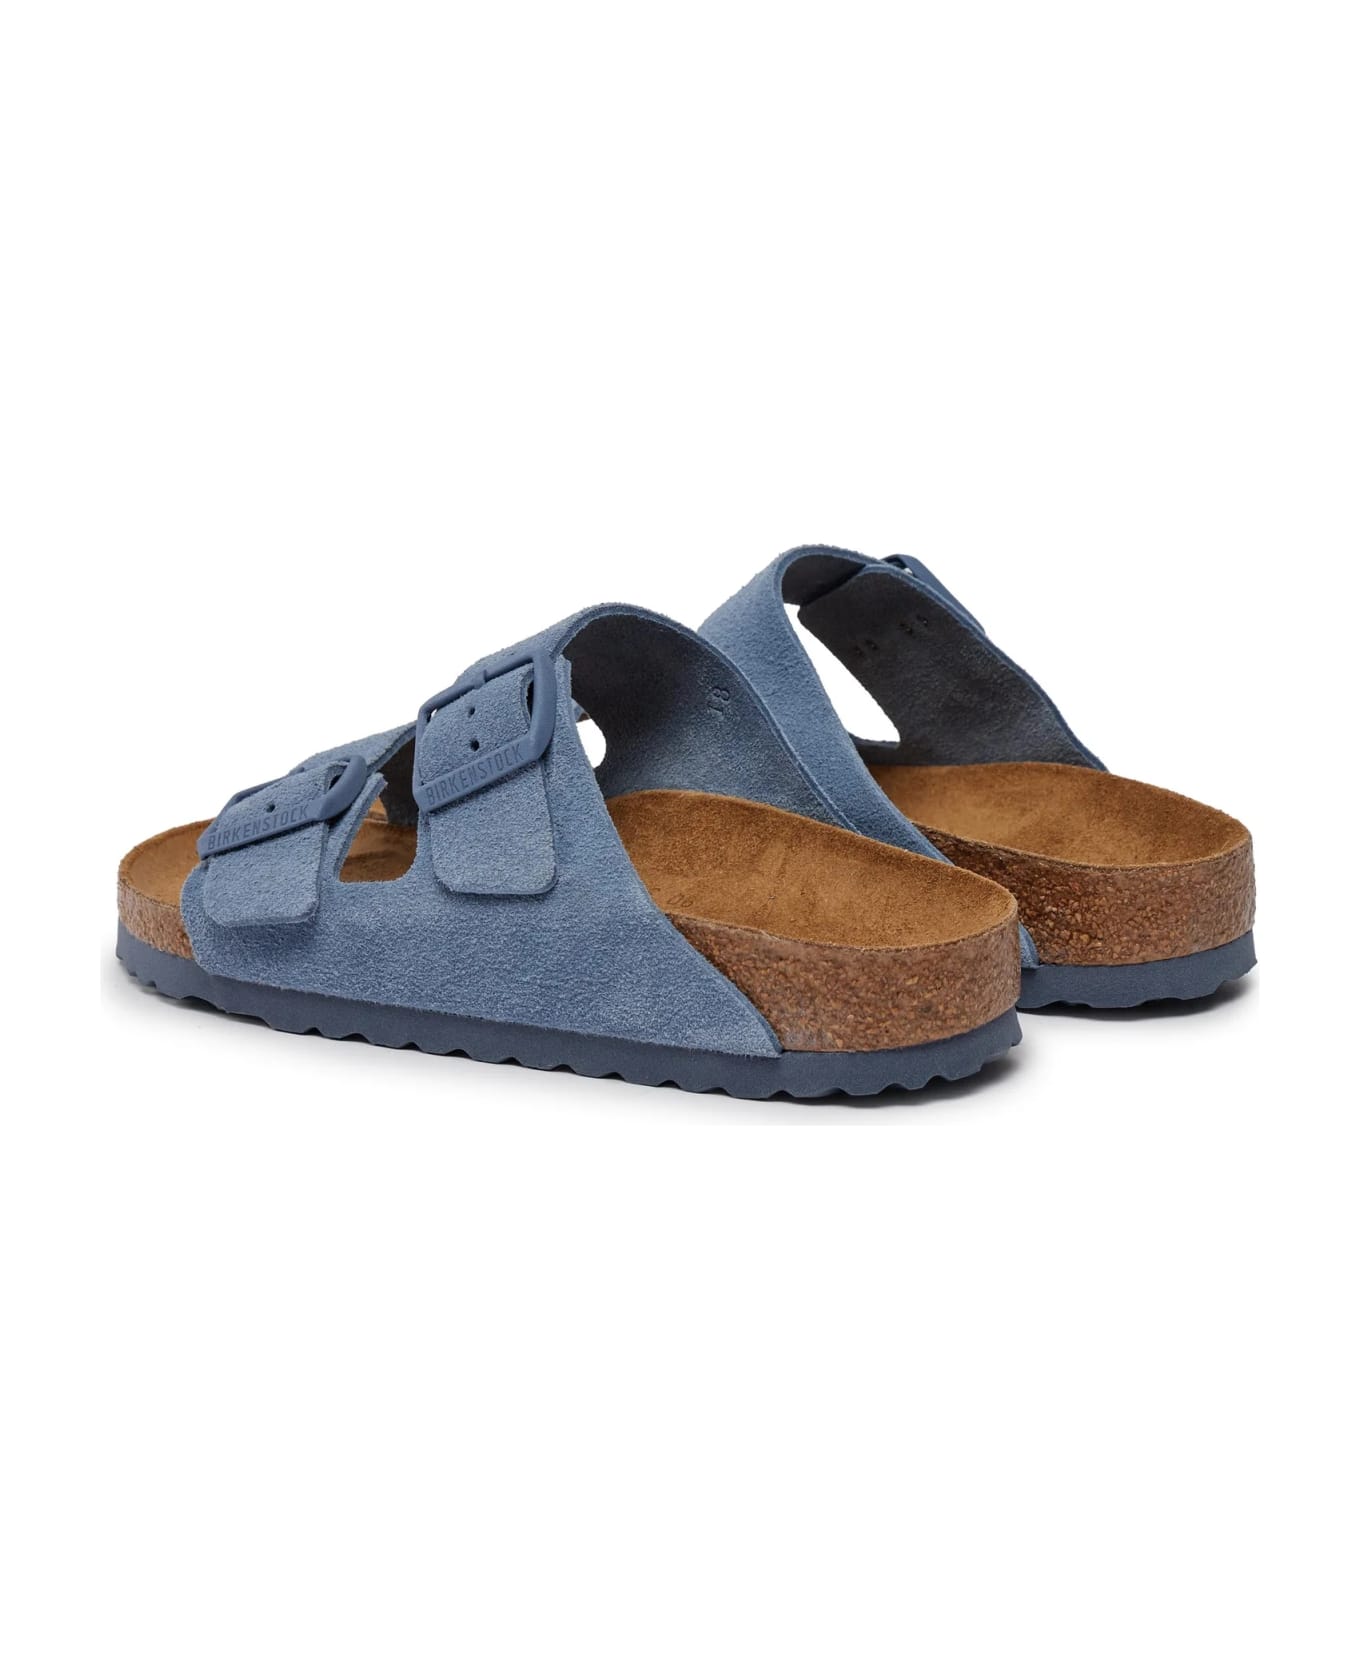 Birkenstock Arizona Sandals - ELEMENTALBLUE